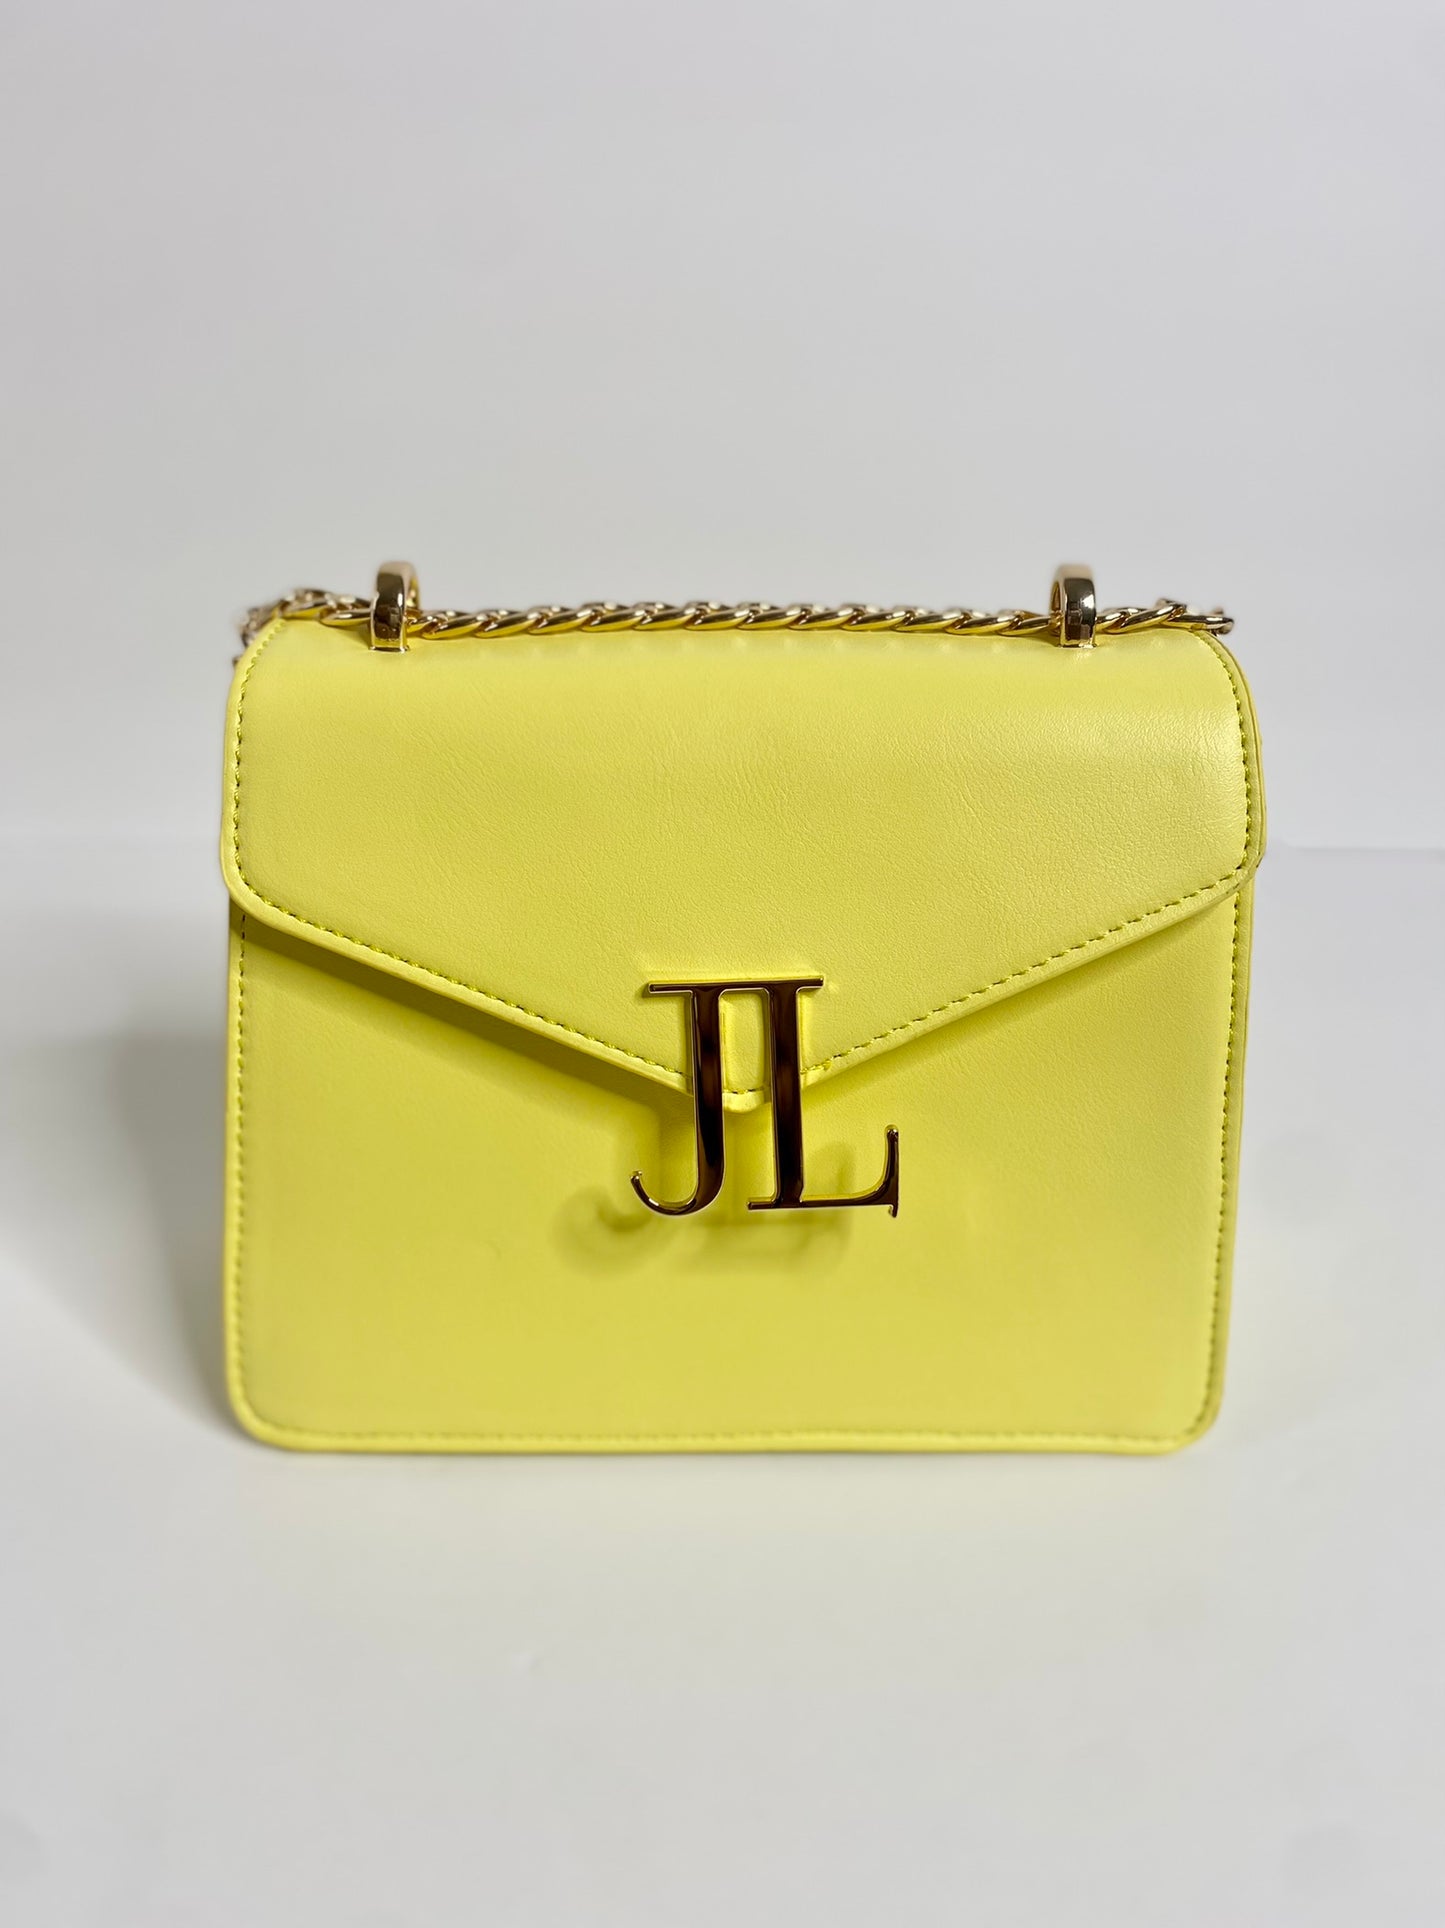 Yellow Signature Chain JL Bag